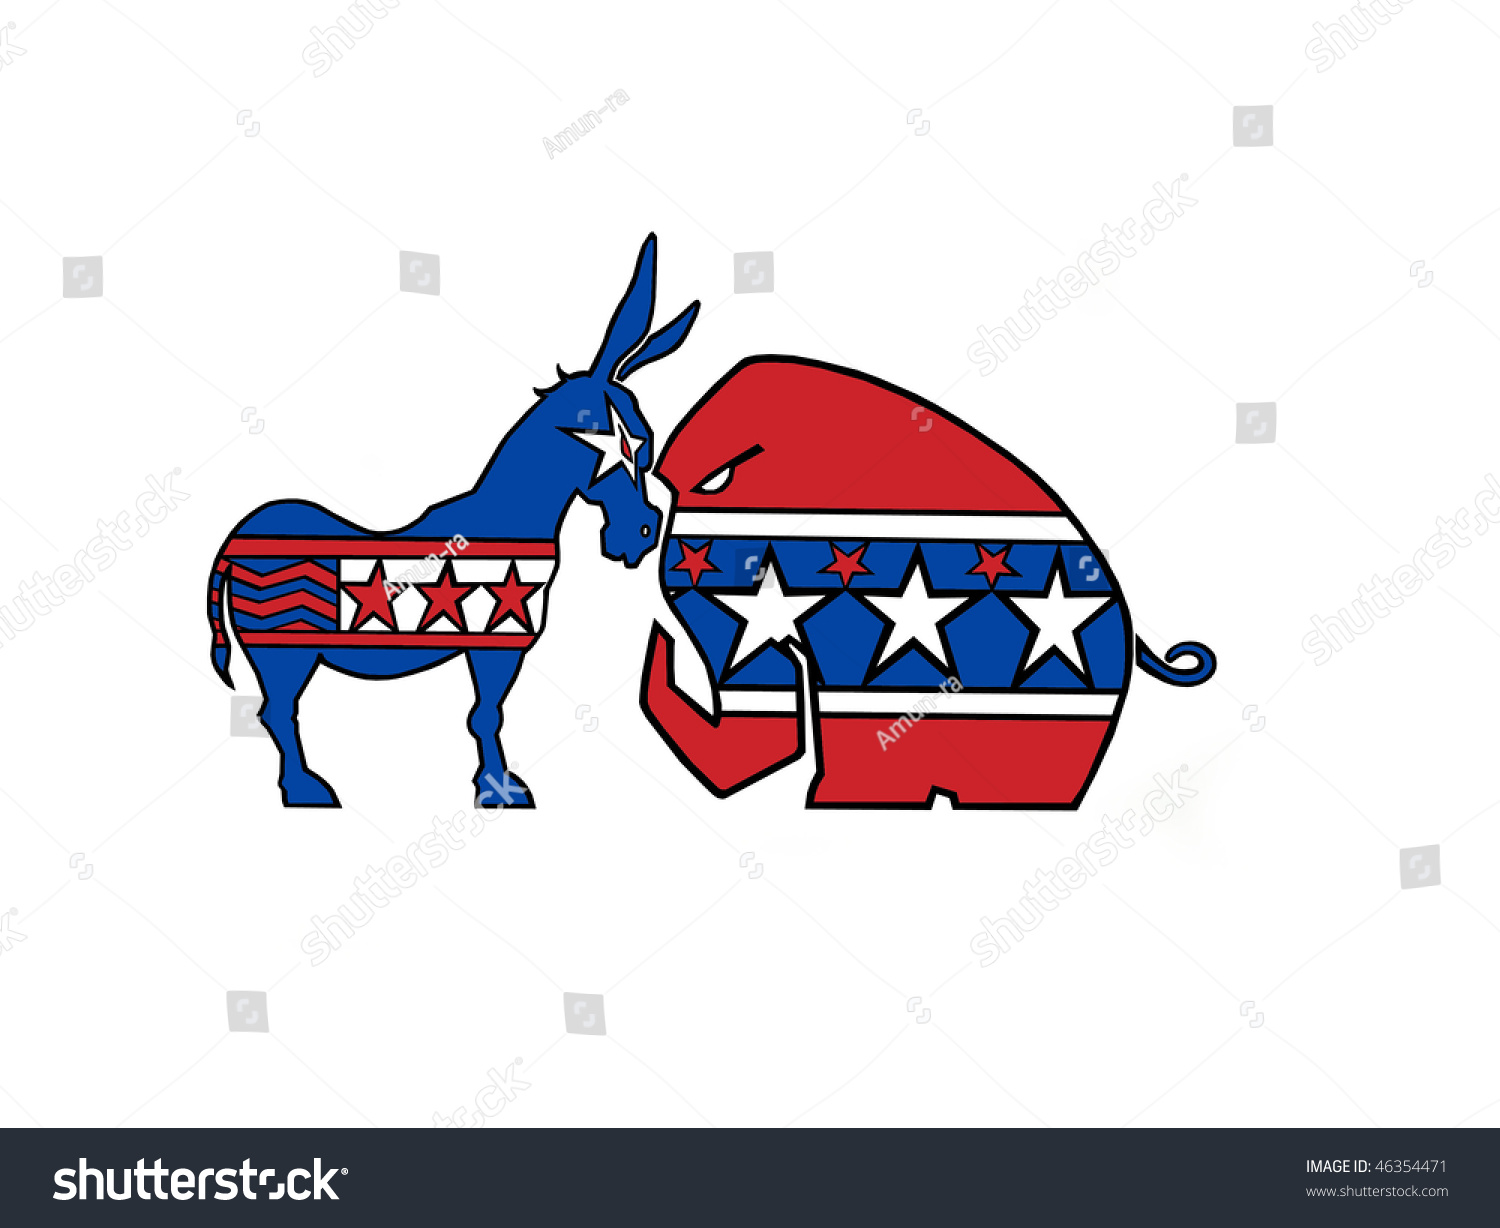 Democratic Donkey & Republican Elephant Stock Photo 46354471 : Shutterstock